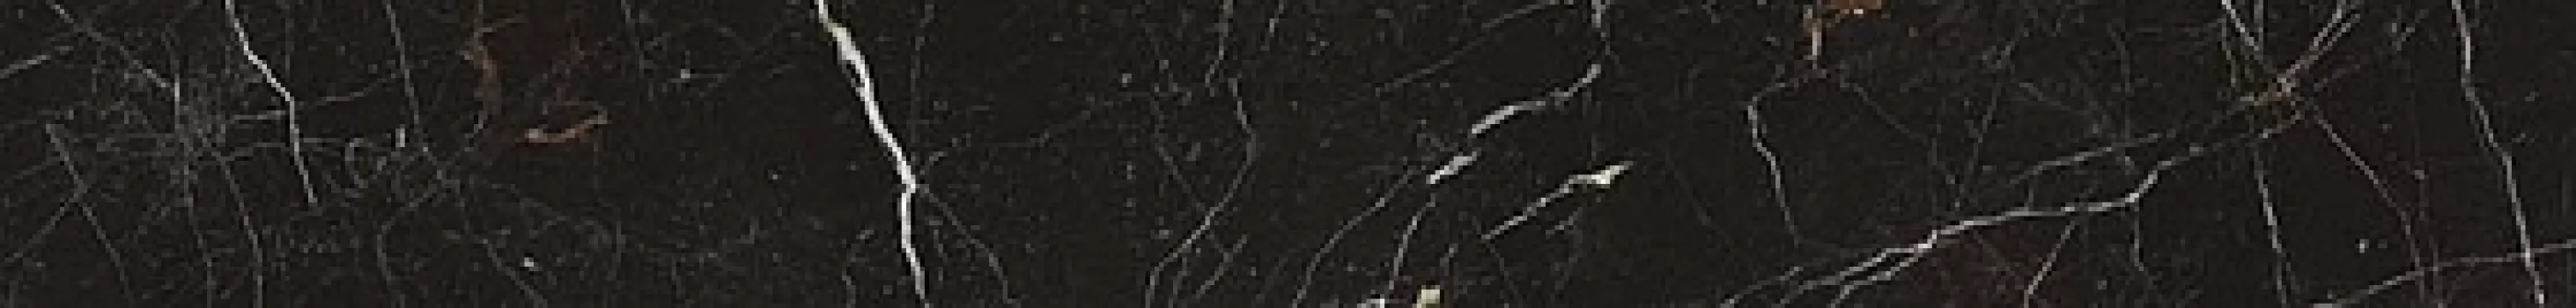 Атлас конкорд Россия Декоративный элемент Imperial Black Listello Lap 60*7